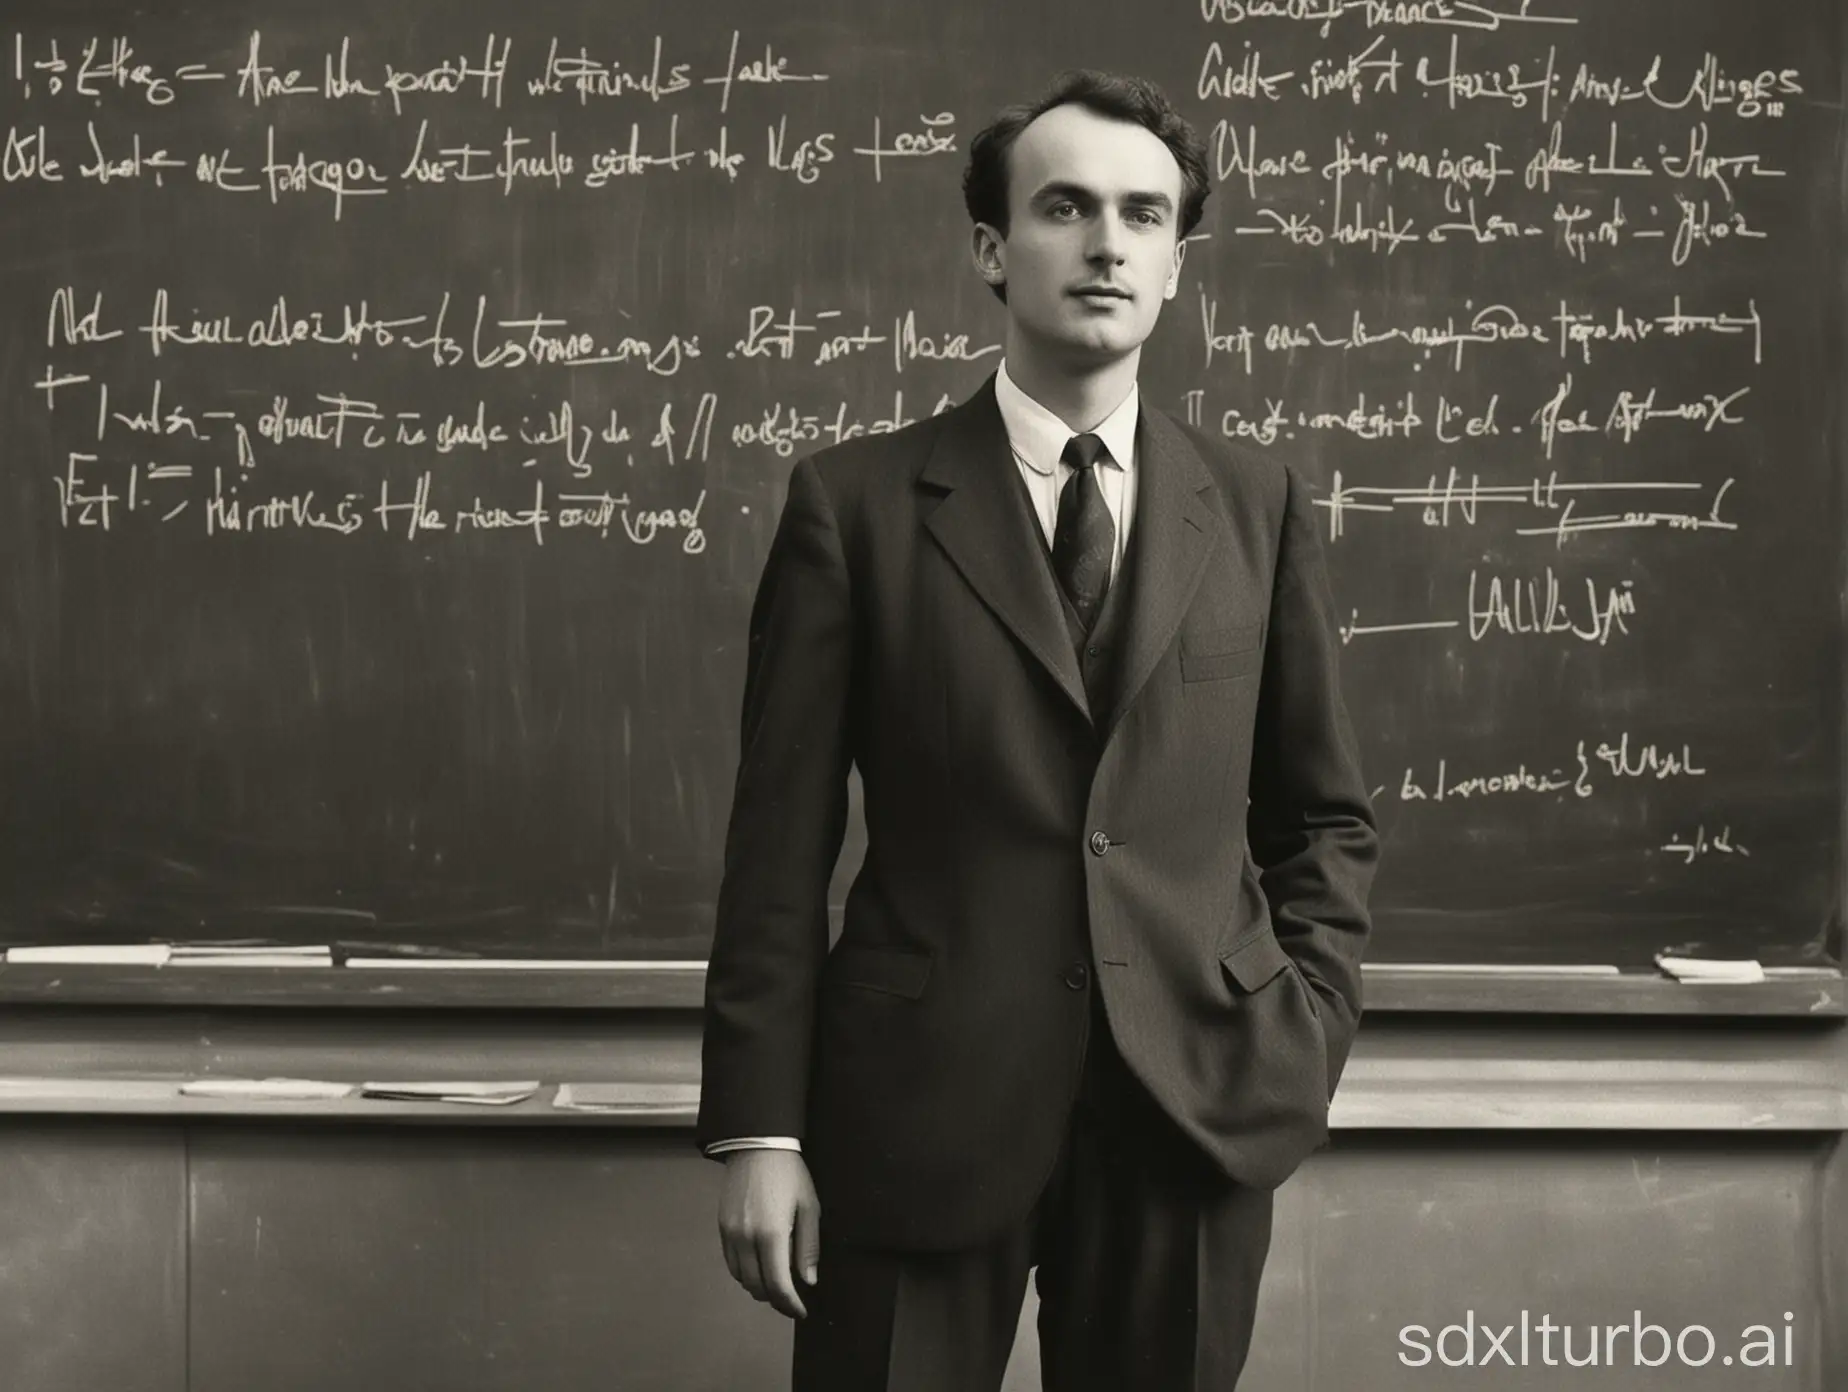 Paul-Dirac-Distinguished-Physicist-in-Modern-Attire-Posing-by-Blackboard